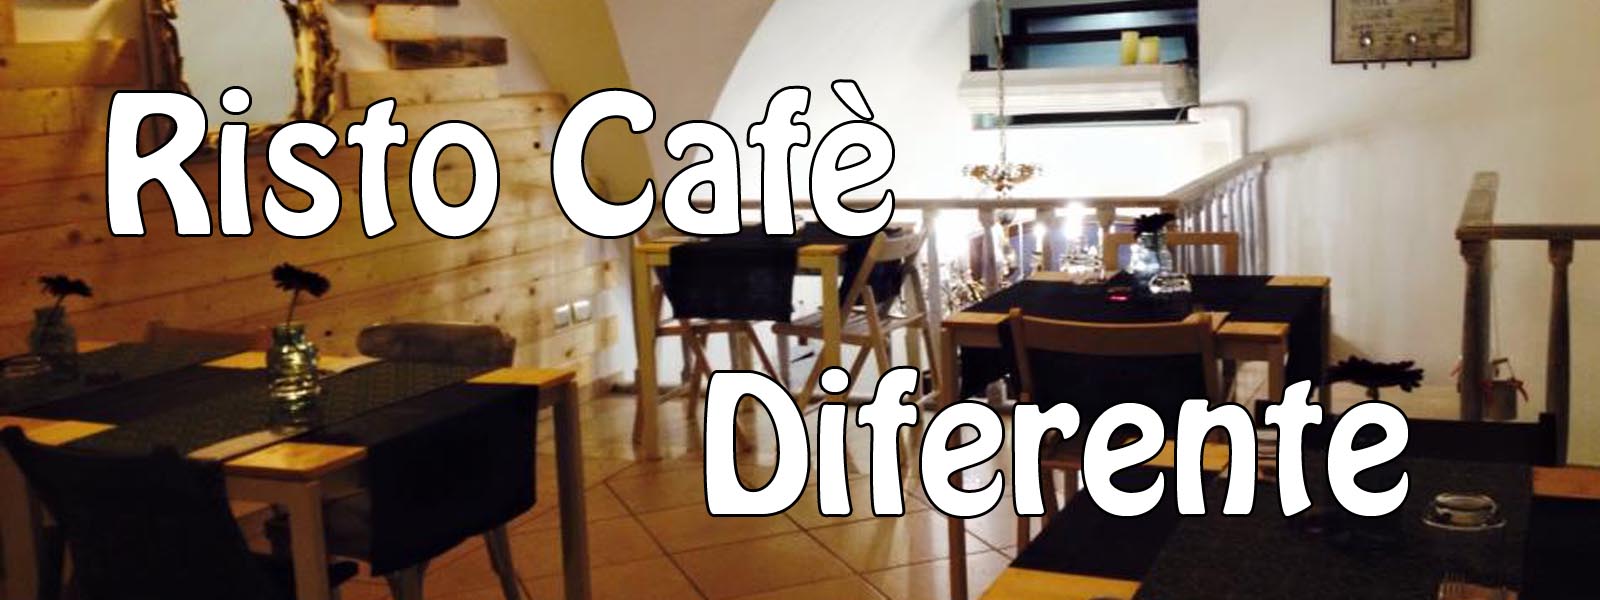 Risto Cafe' Diferente, in piazza a Ostuni